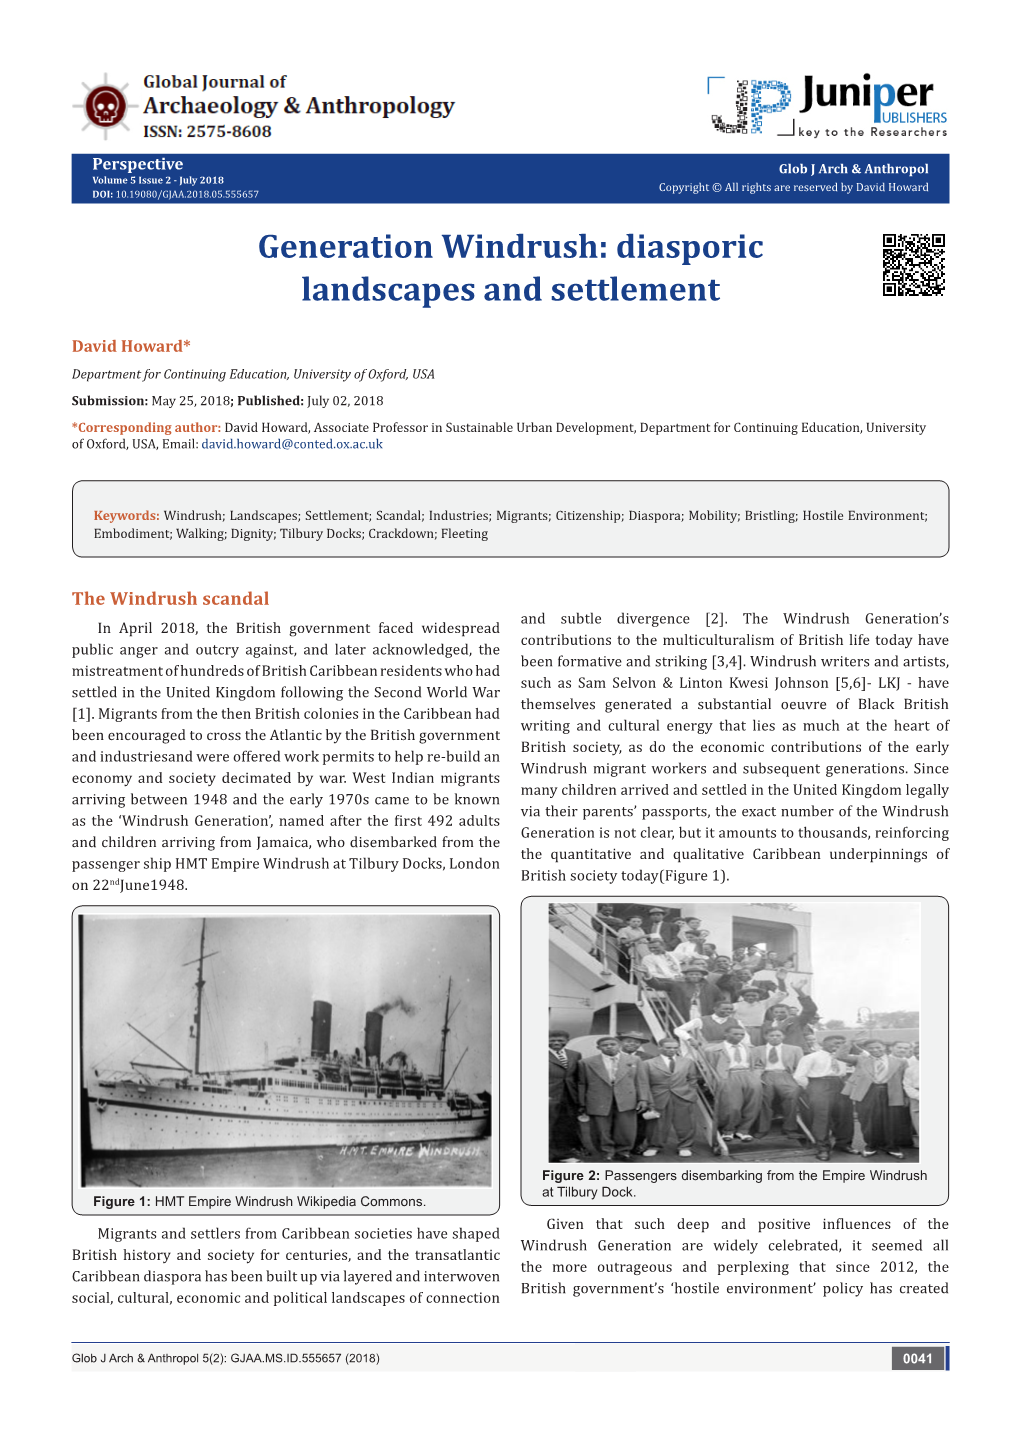 Generation Windrush: Diasporic Landscapes and Settlement